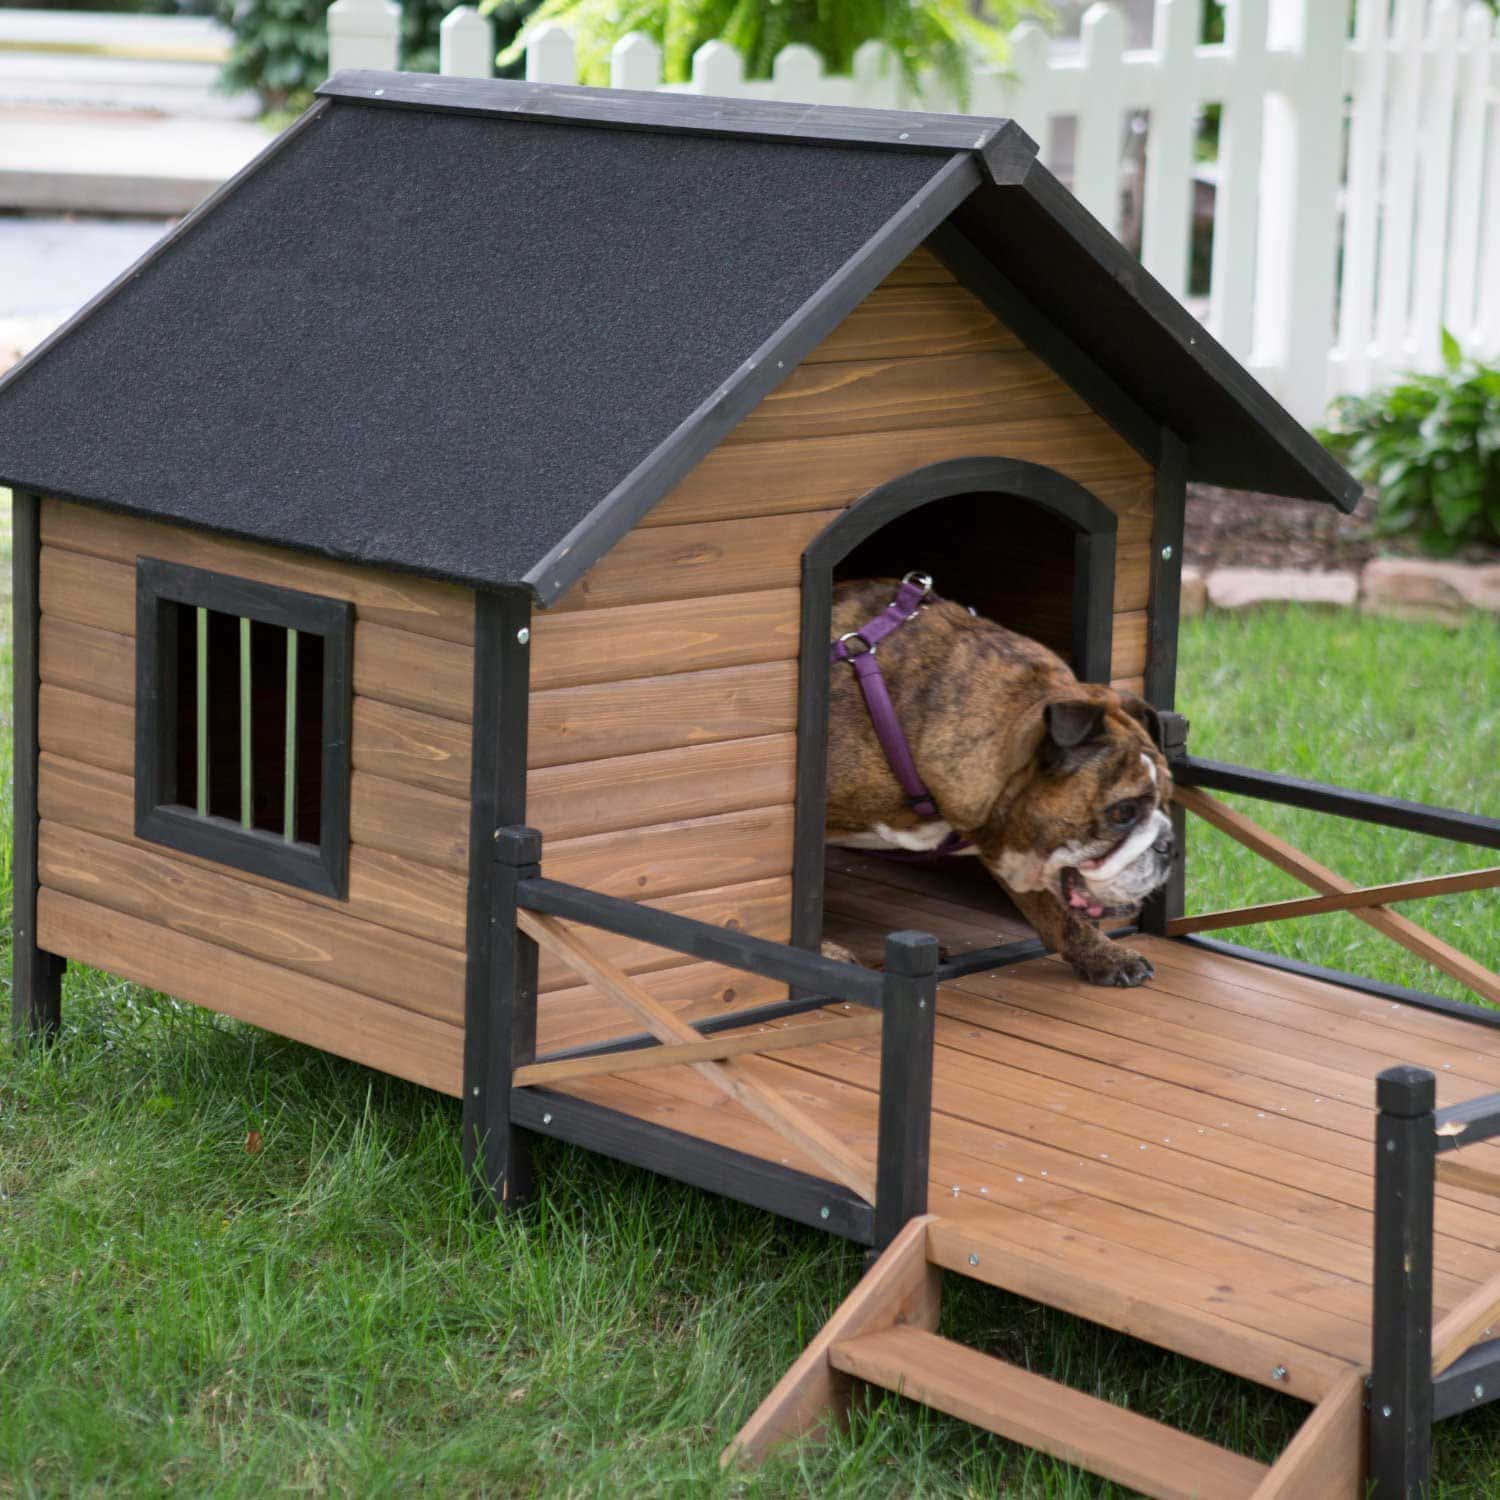 New dog house. Собачья конура будка. Красивая собачья конура. Домик для собаки. Красивые домики для собак.